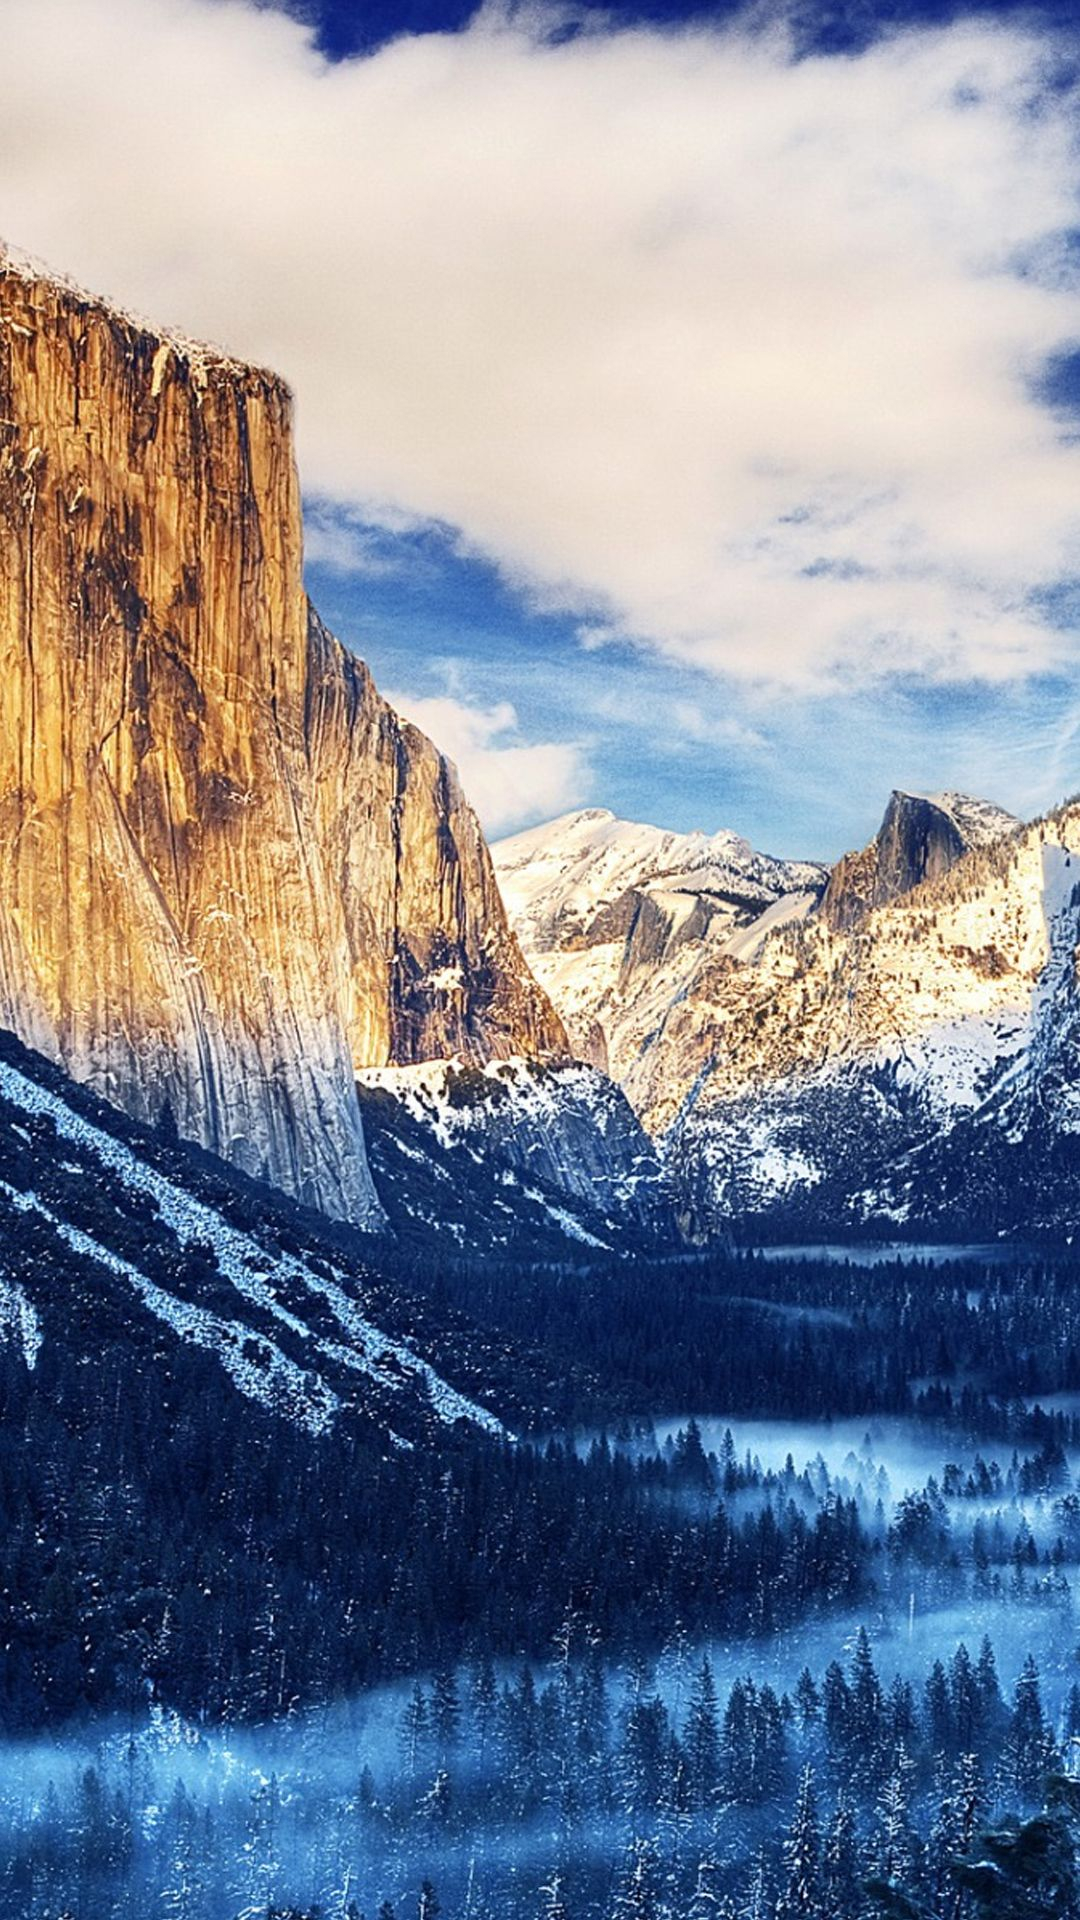 1080x1920 Yosemite National Park Winter Landscape iPhone 6 Plus HD Wallpaper | Iphone wallpaper winter, Landscape wallpaper, Nature iphone wallpaper